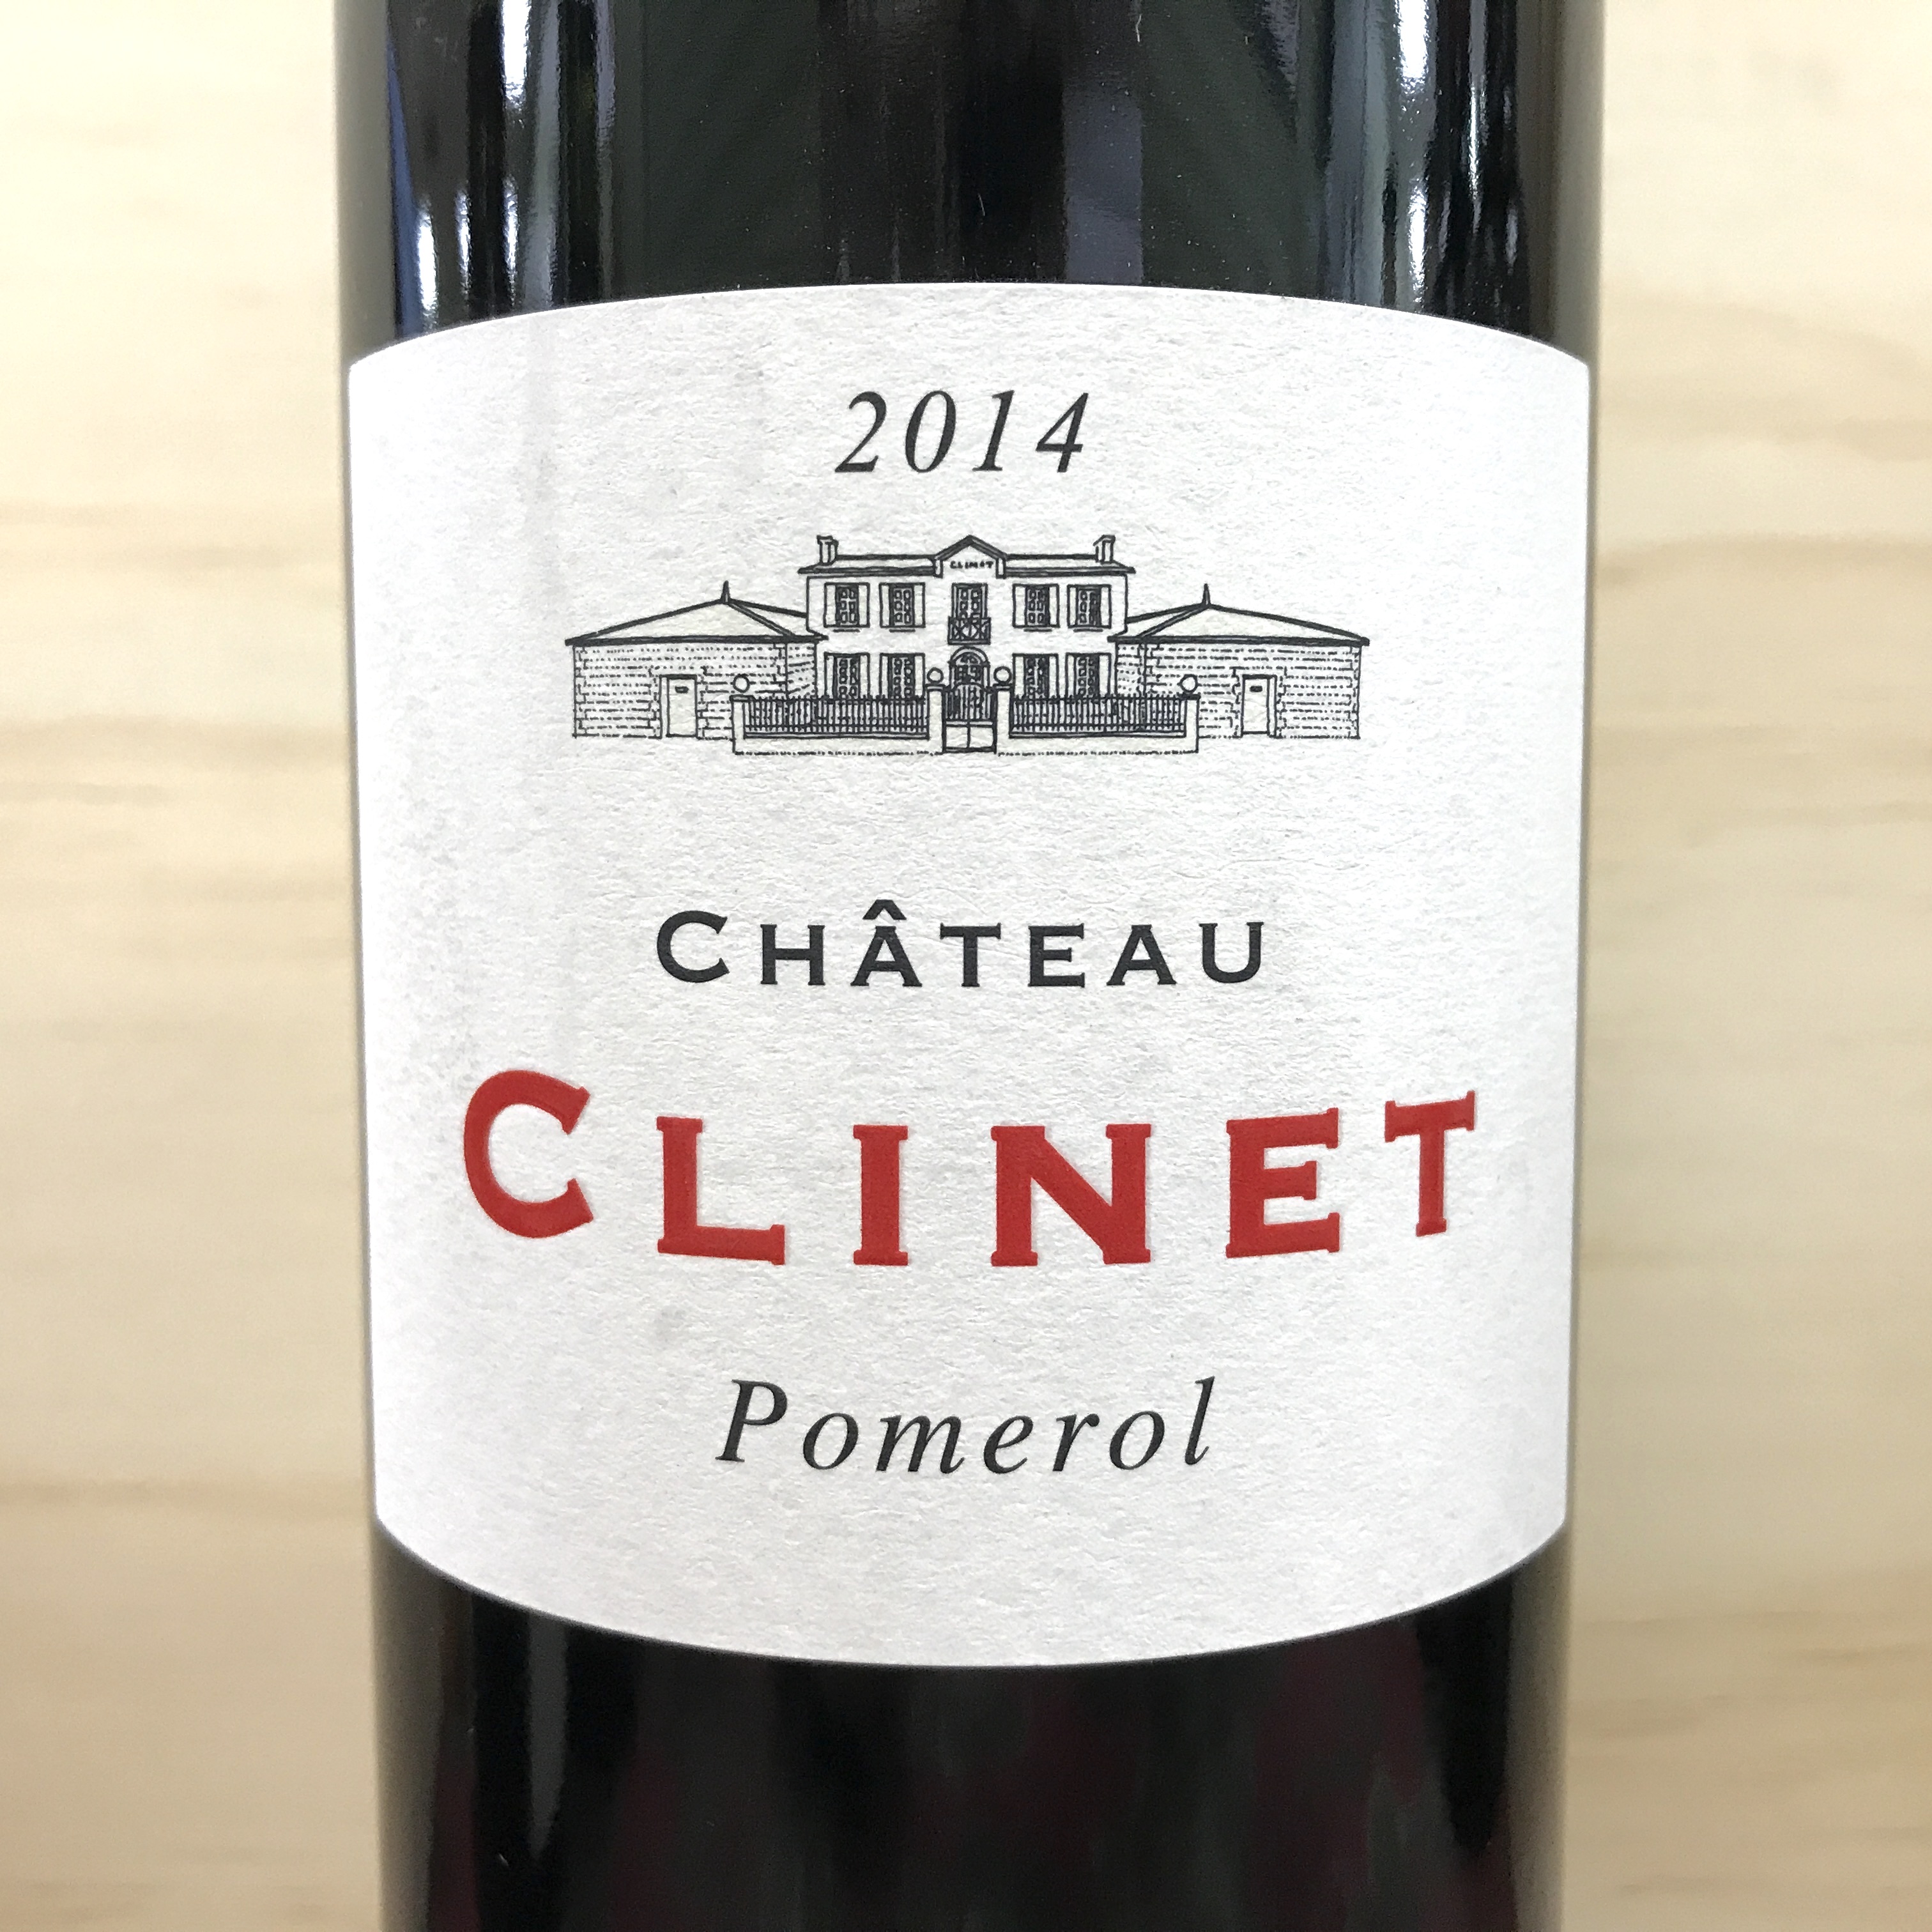 Chateau Clinet Pomerol 2014